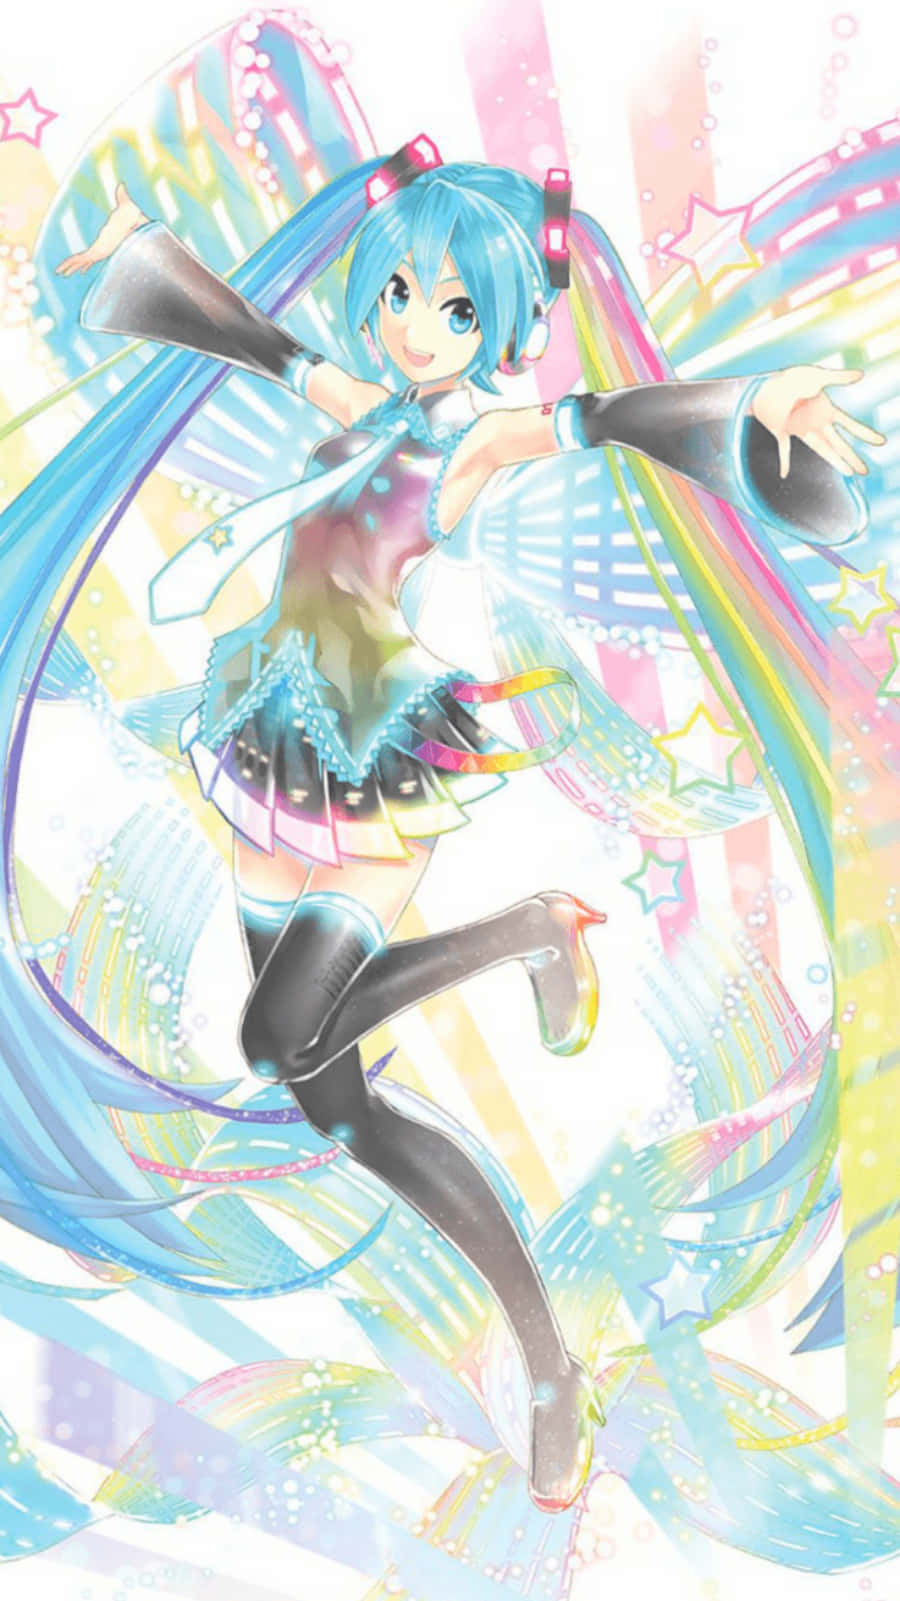 Wallpaper ID 352373  Anime Vocaloid Phone Wallpaper Hatsune Miku  1080x2460 free download